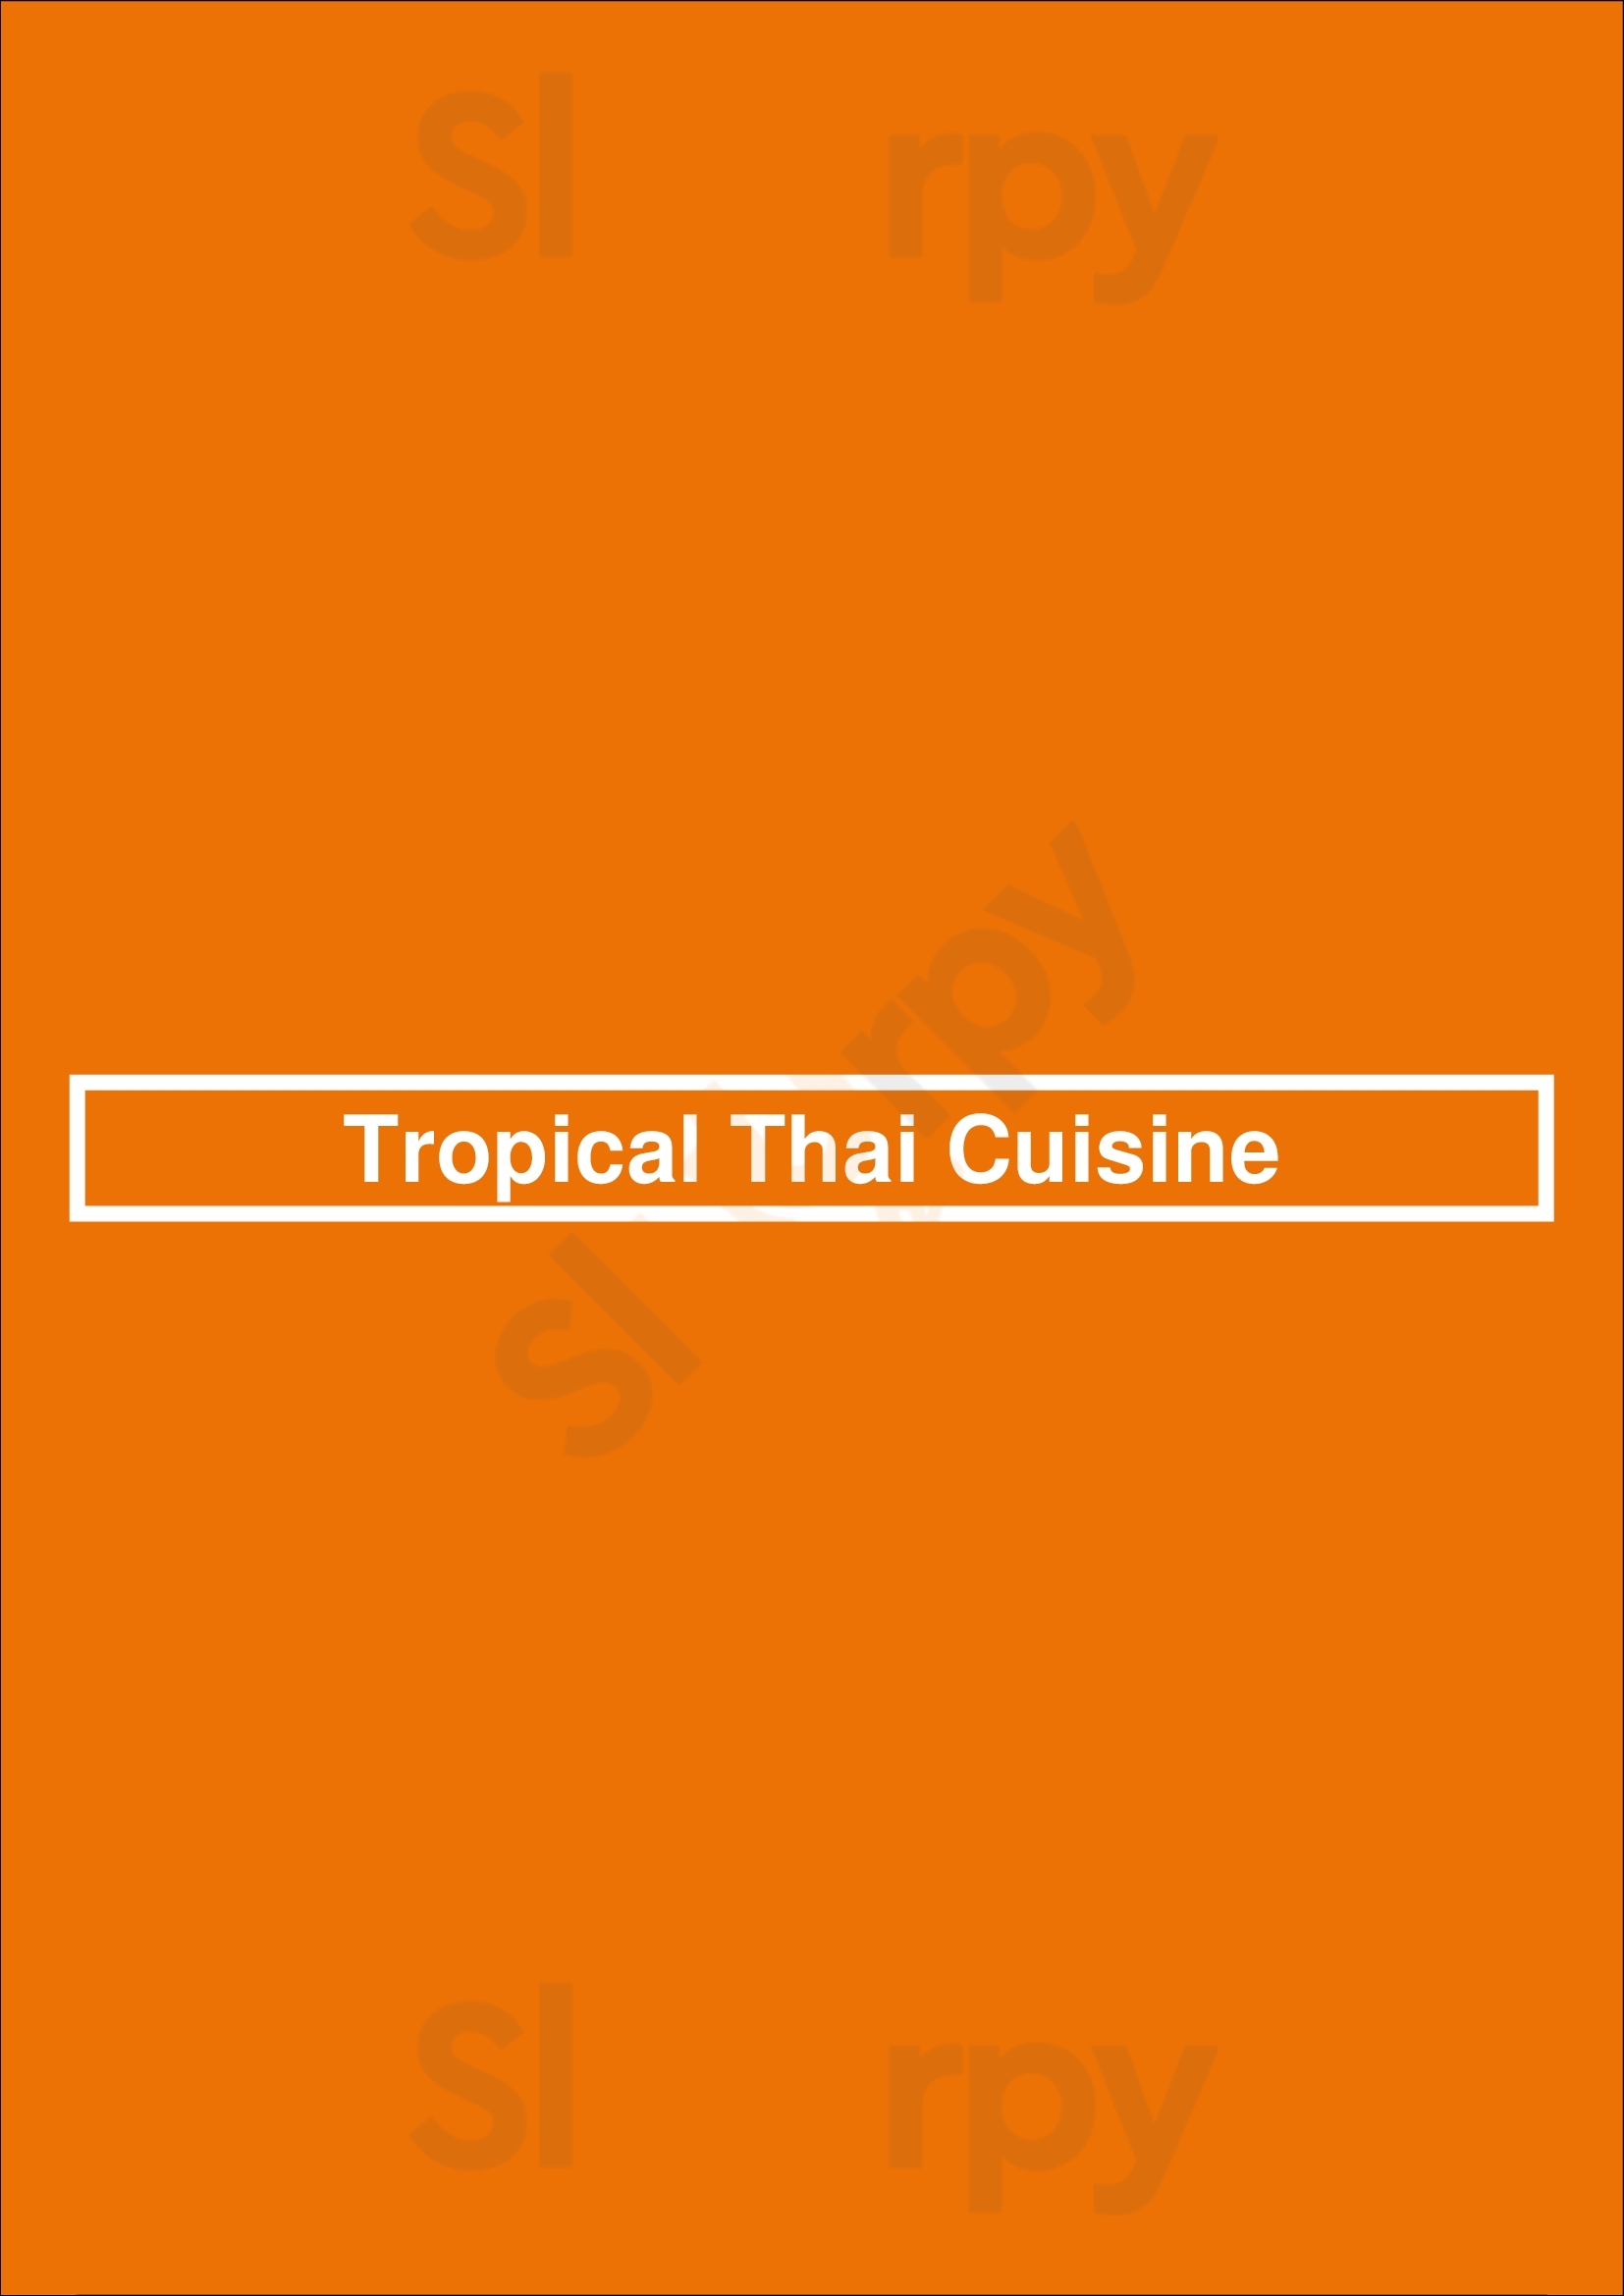 Tropical Thai Cuisine Toronto Menu - 1